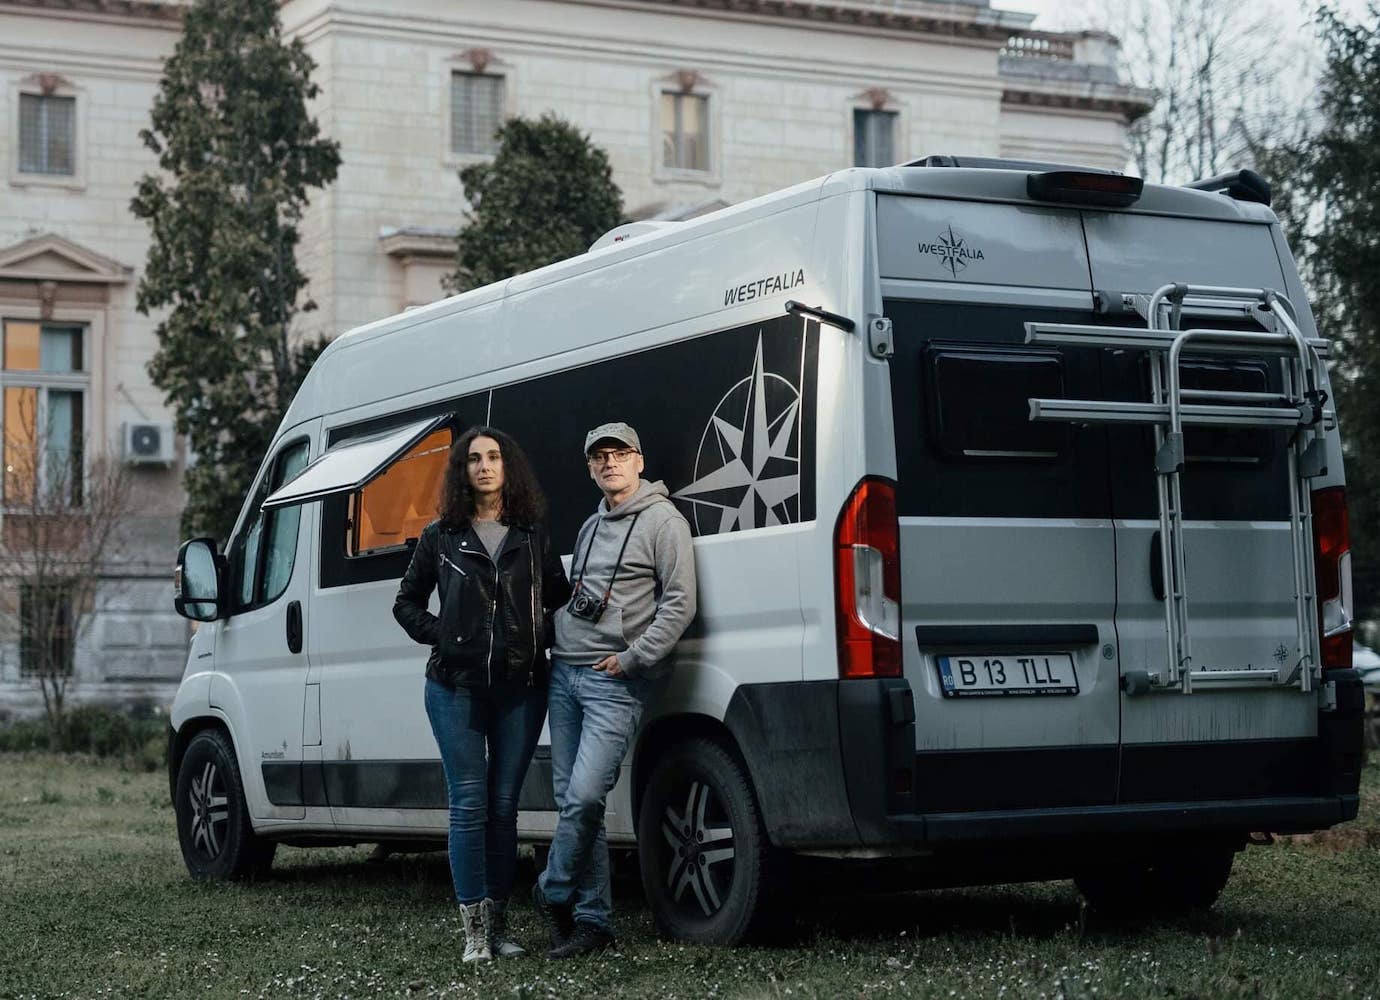 We travelled across Europe in a campervan to meet Romania’s growing diaspora